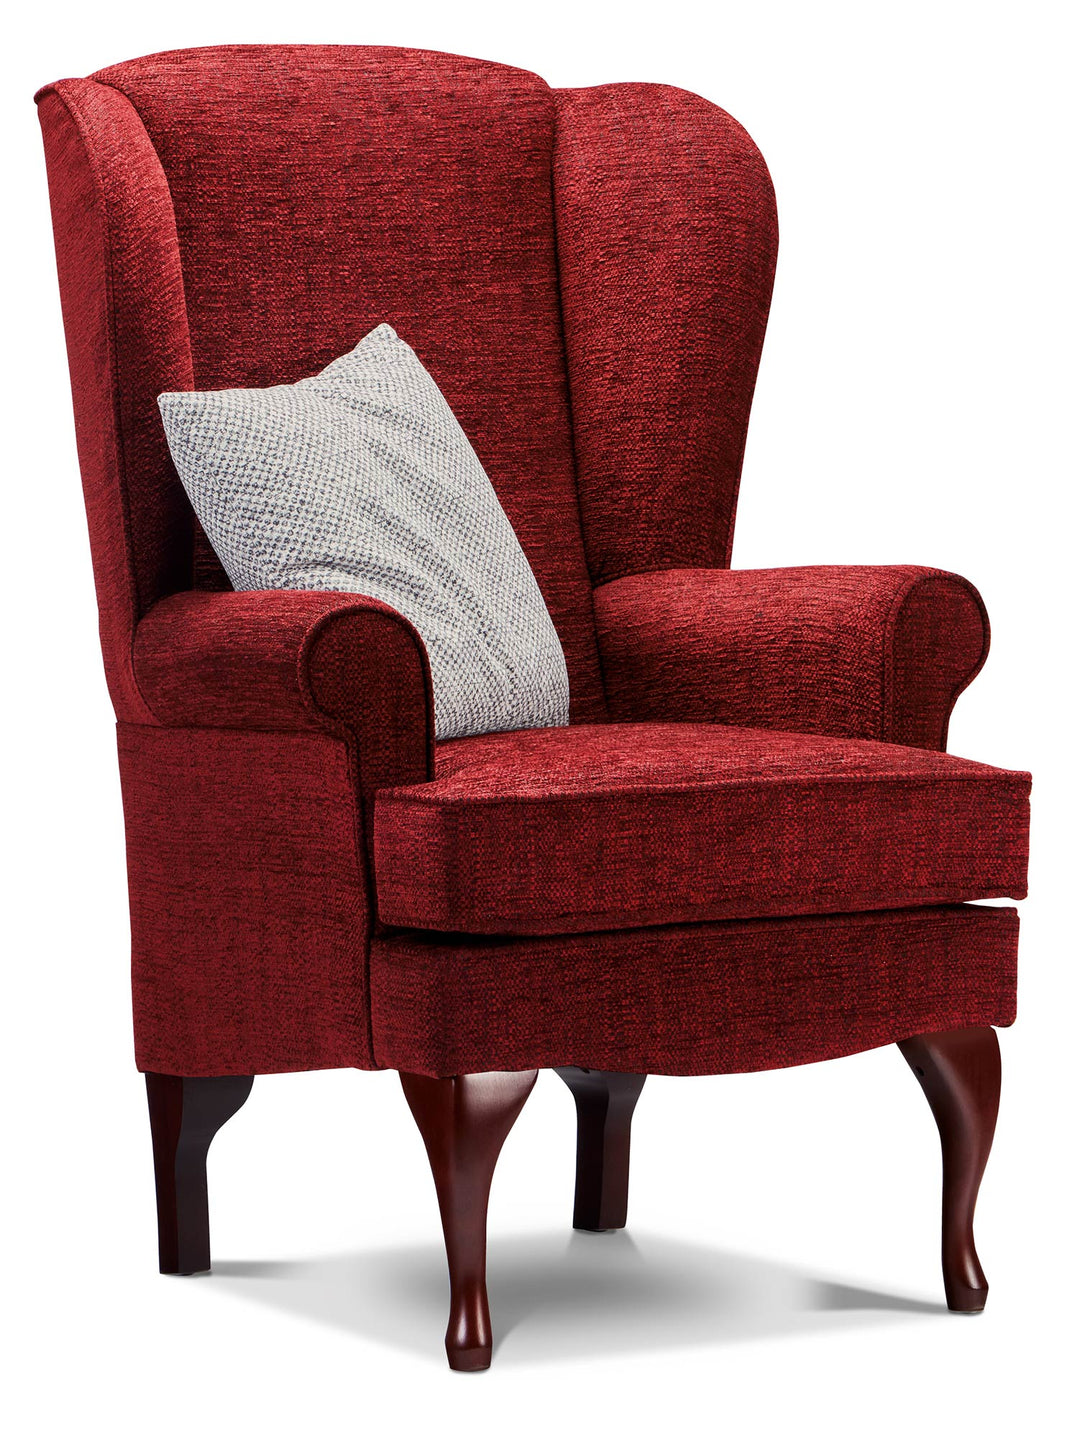 Hampton Queen Anne Wingback Armchair